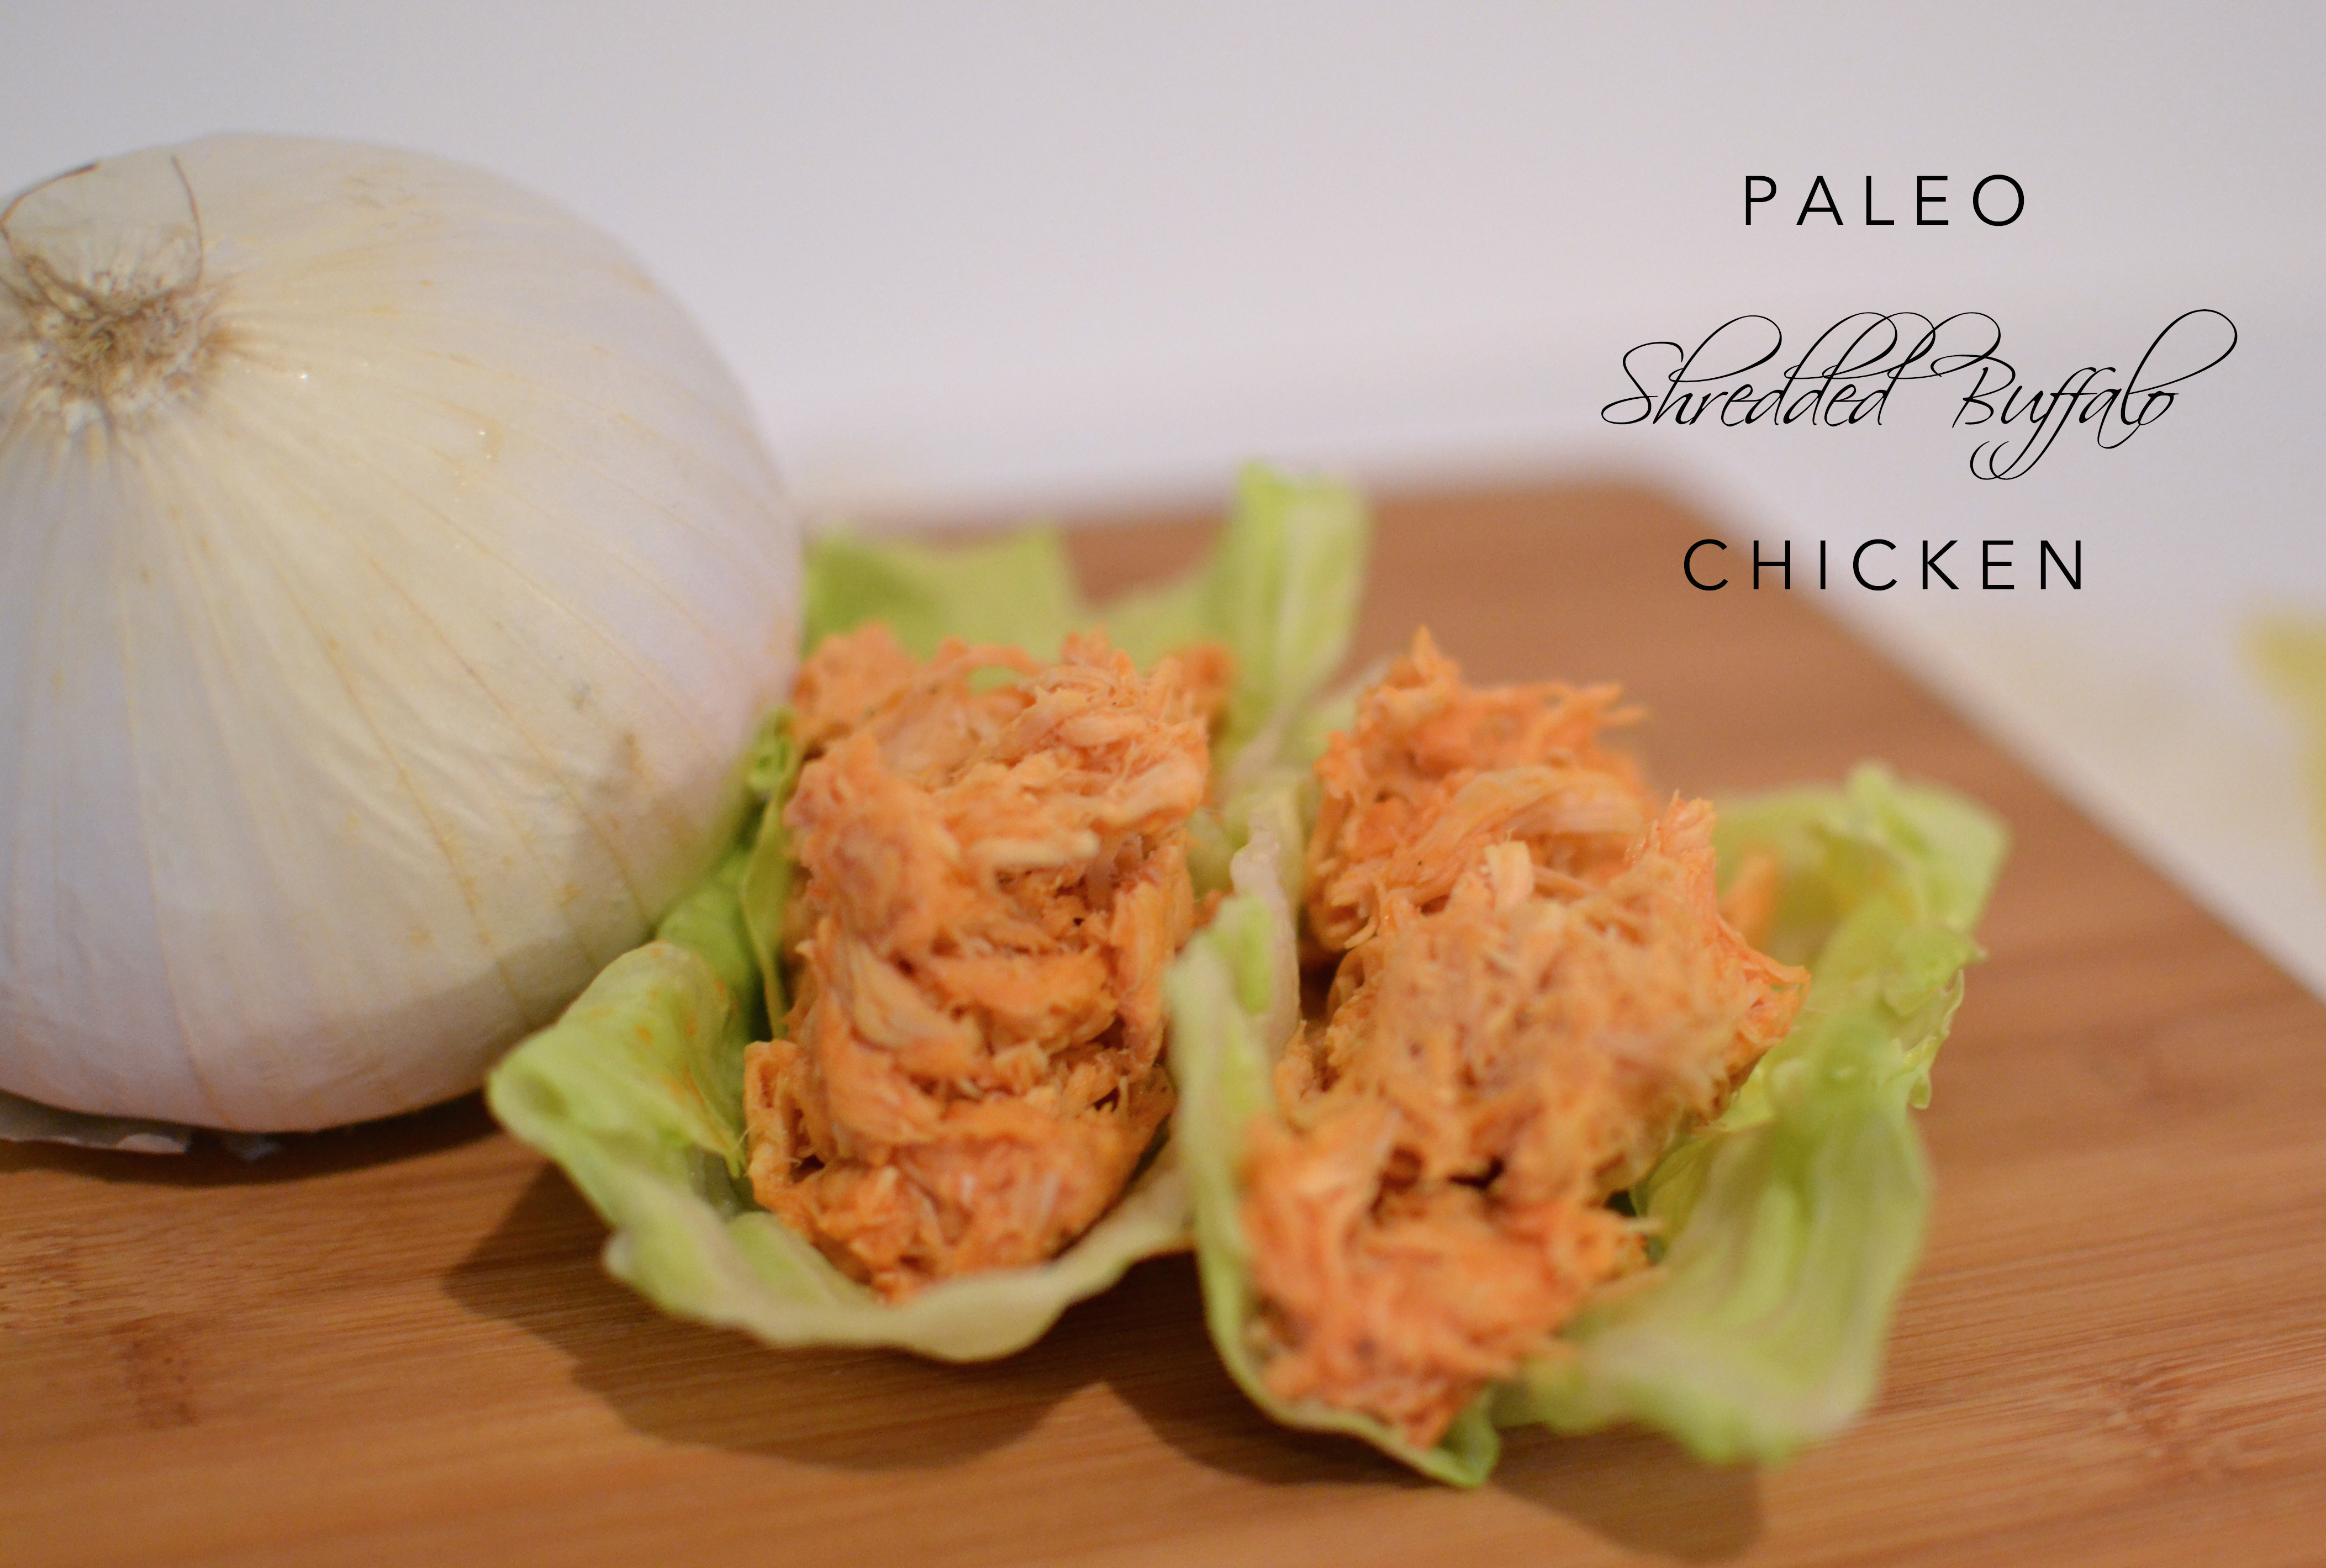 Paleo Shredded Buffalo Chicken